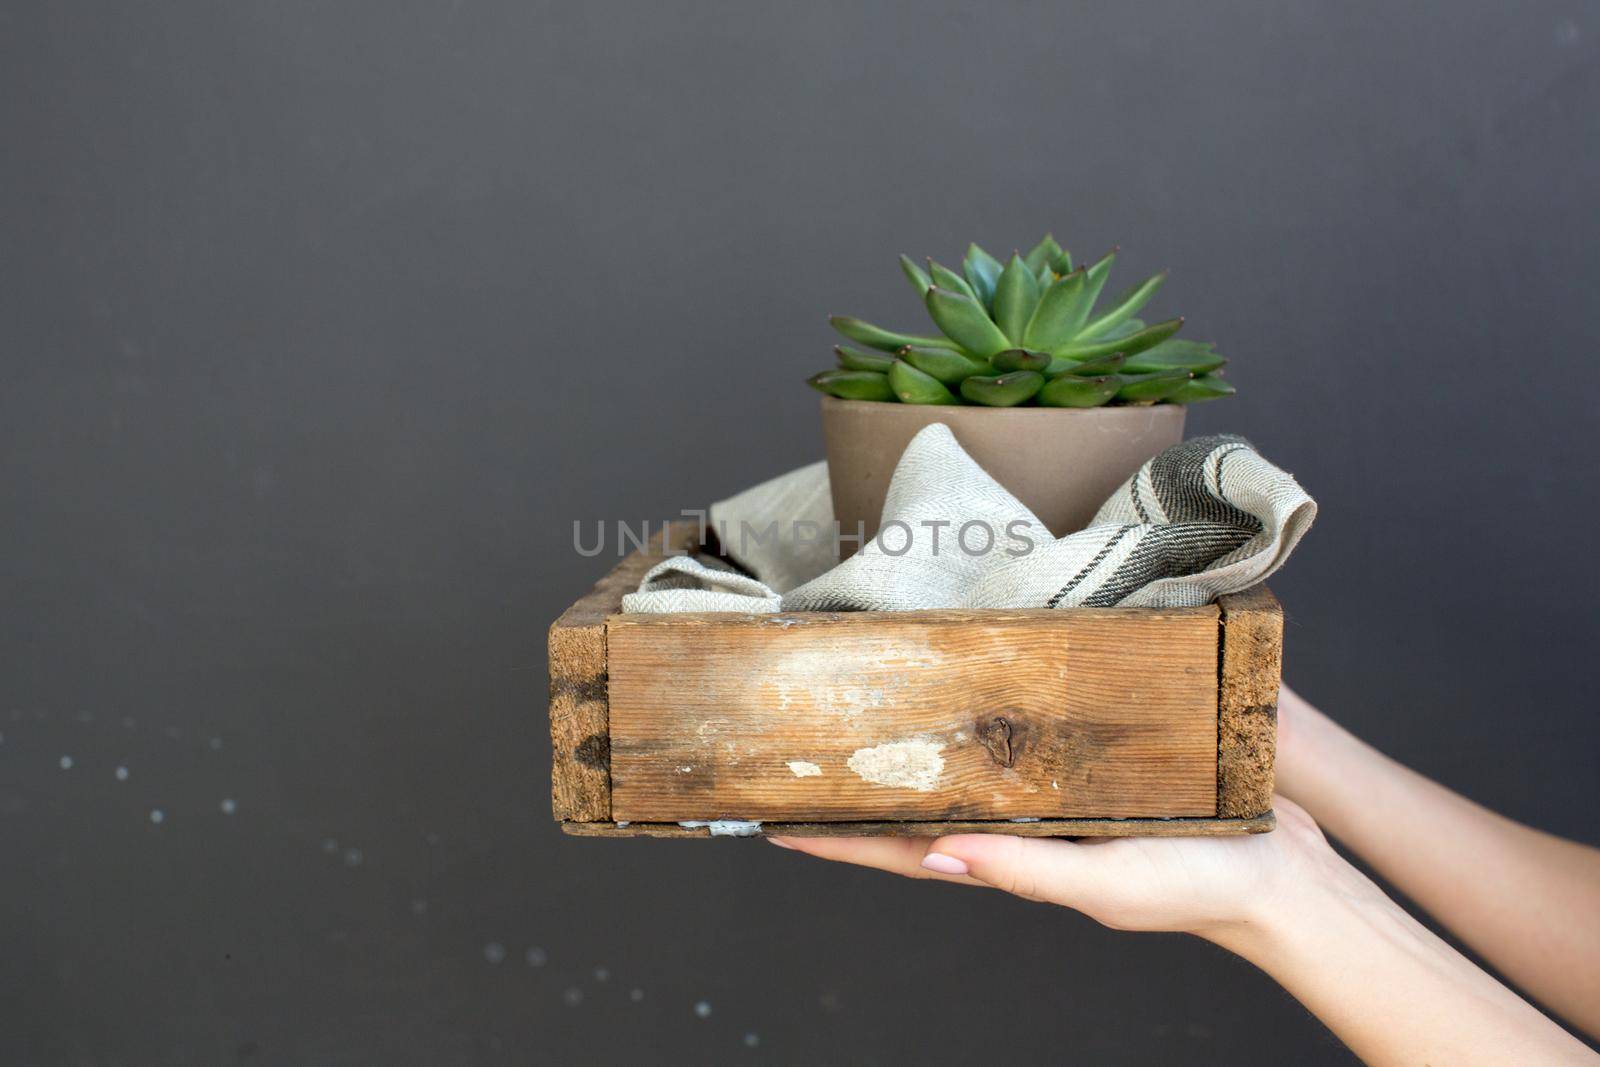 Crop photo of hands holding flower in flowerpot in wooden box on black background.